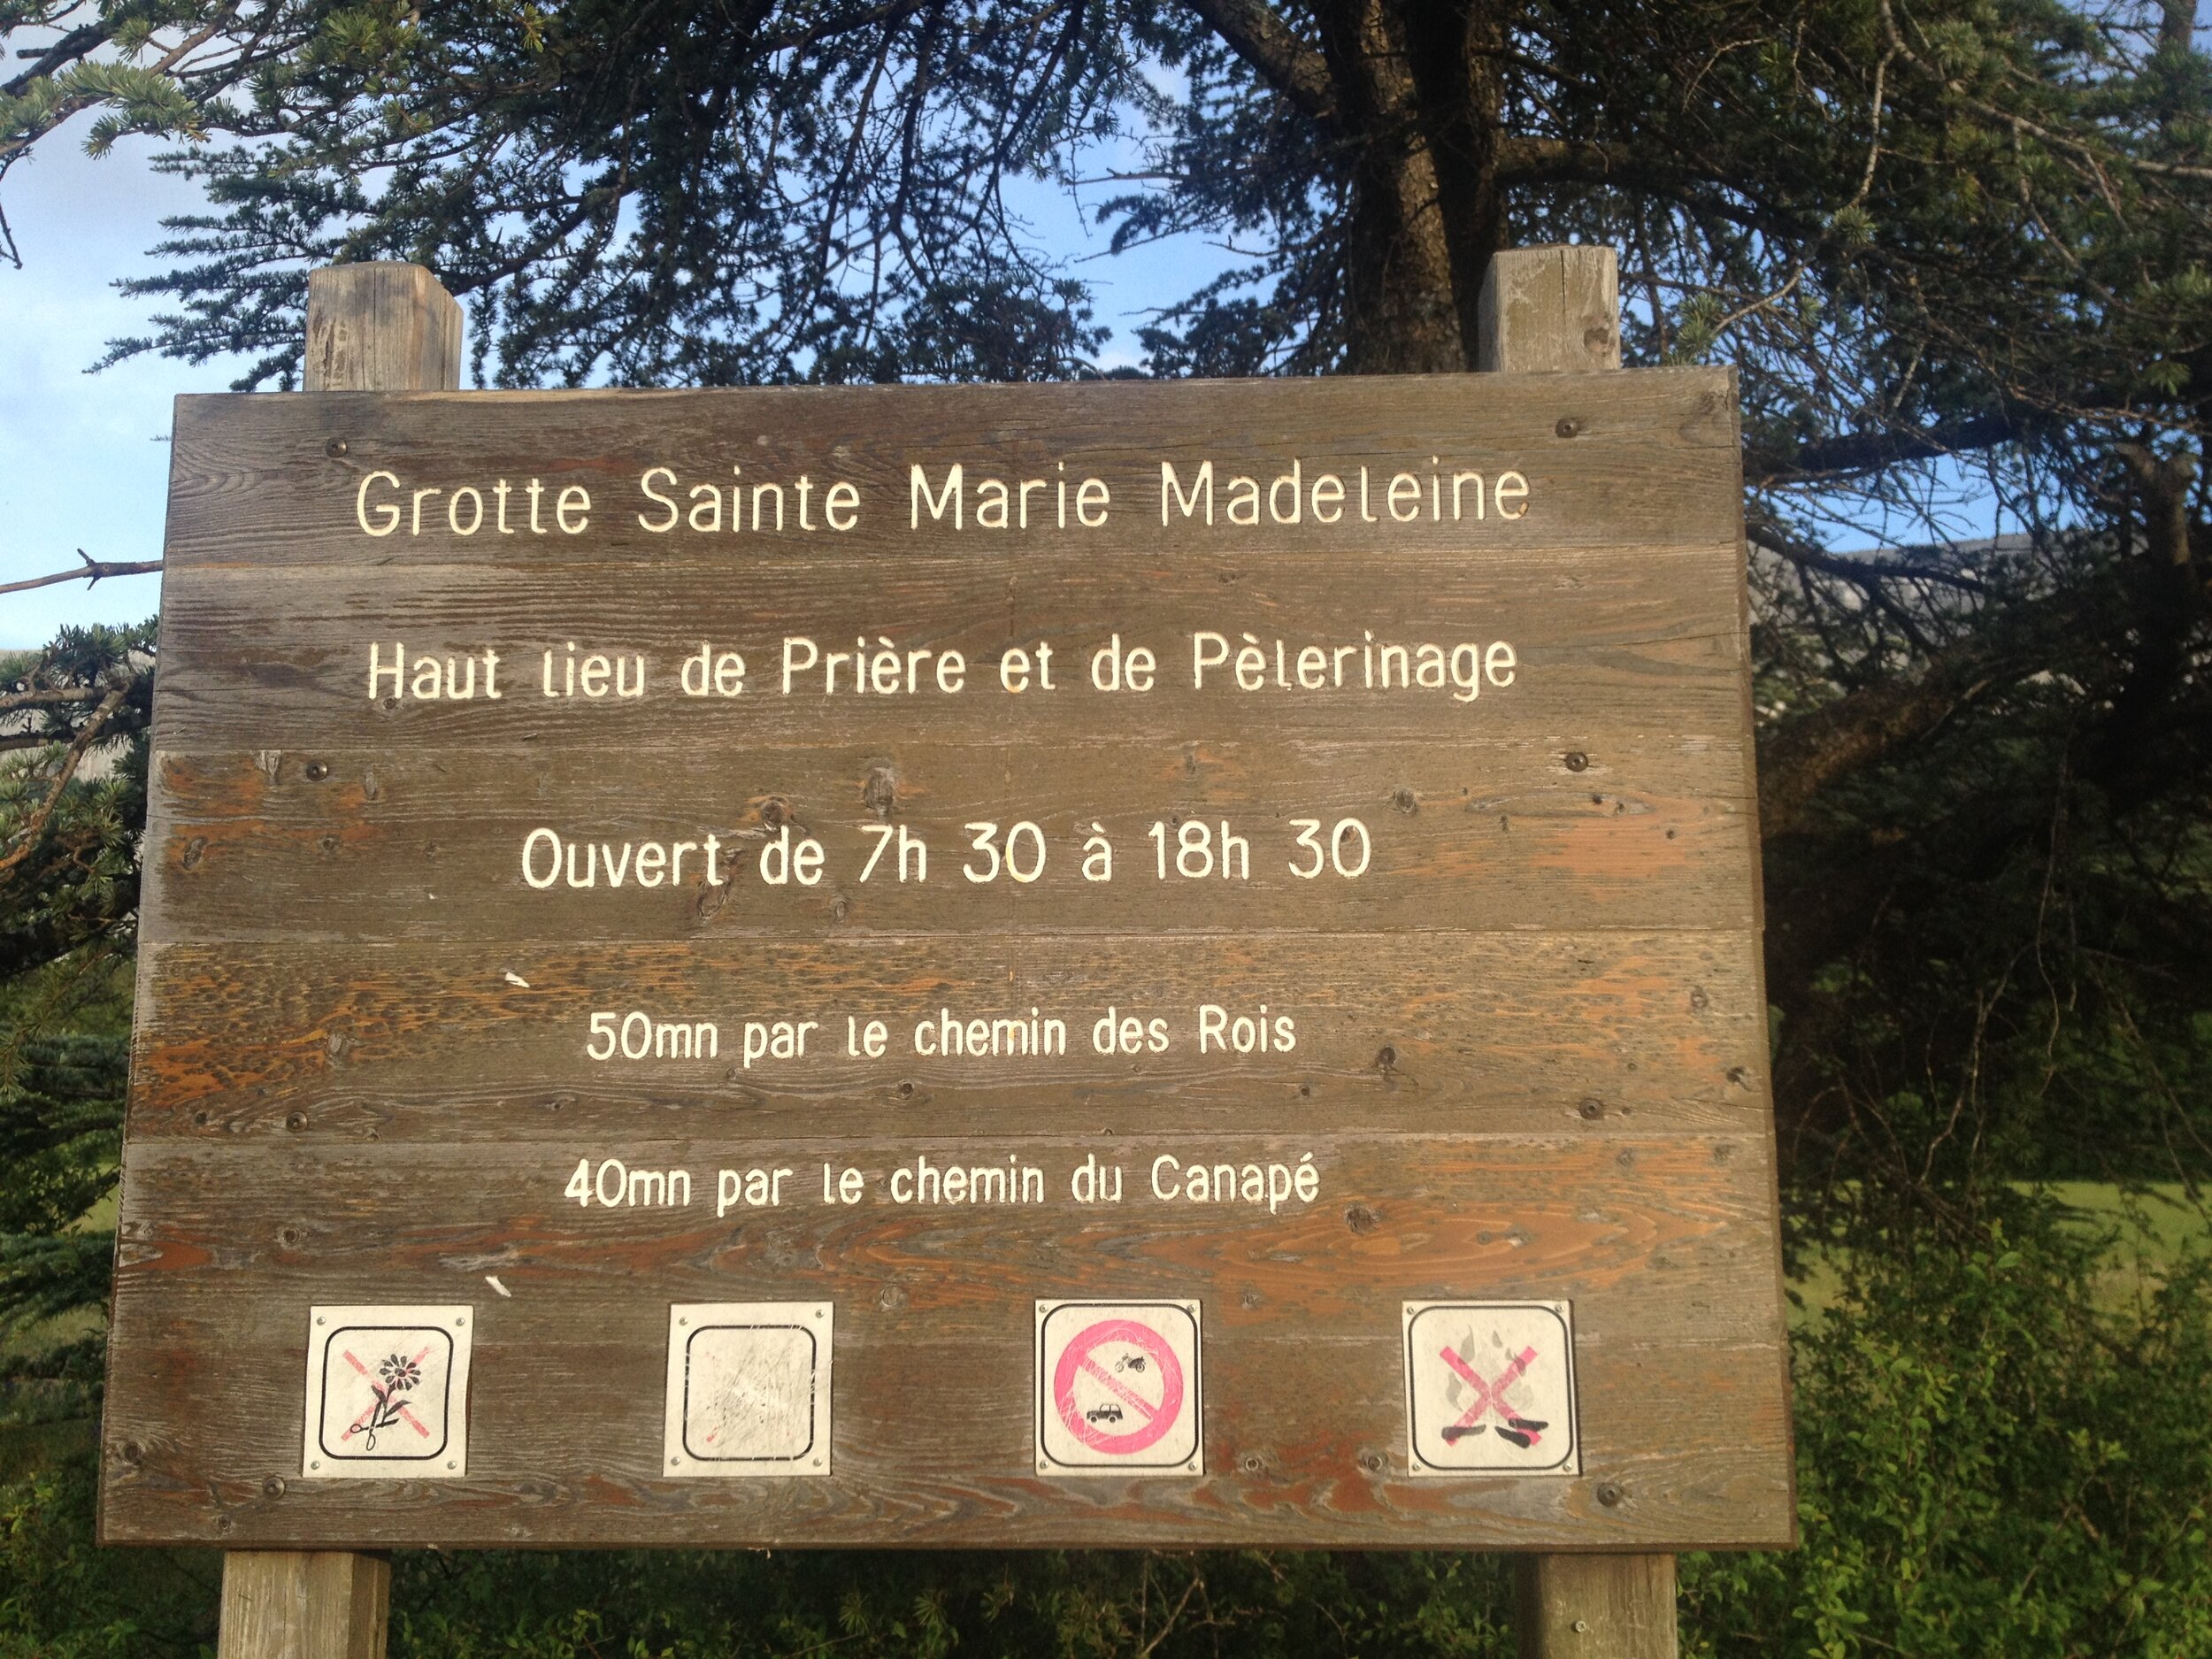 Grotte Sainte Marie Madeleine Sign.jpeg